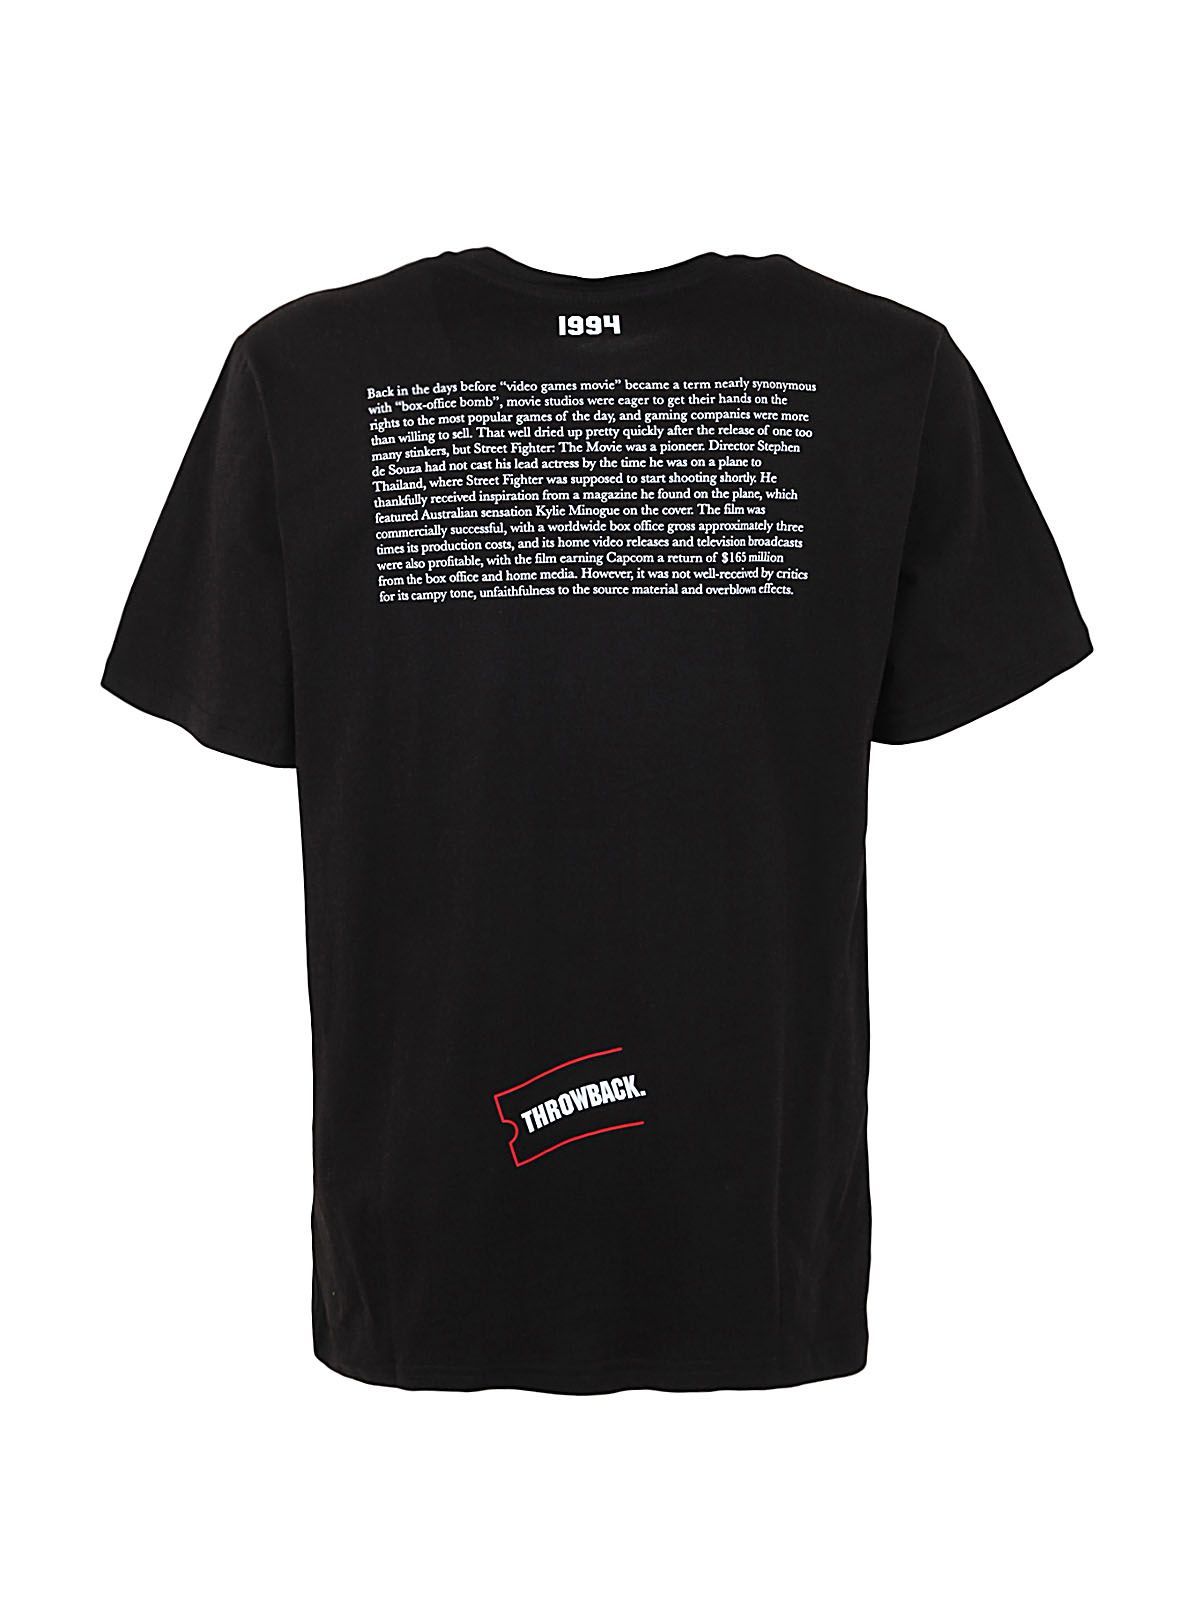 Shop Throwback Men's T-shirt: Fighter